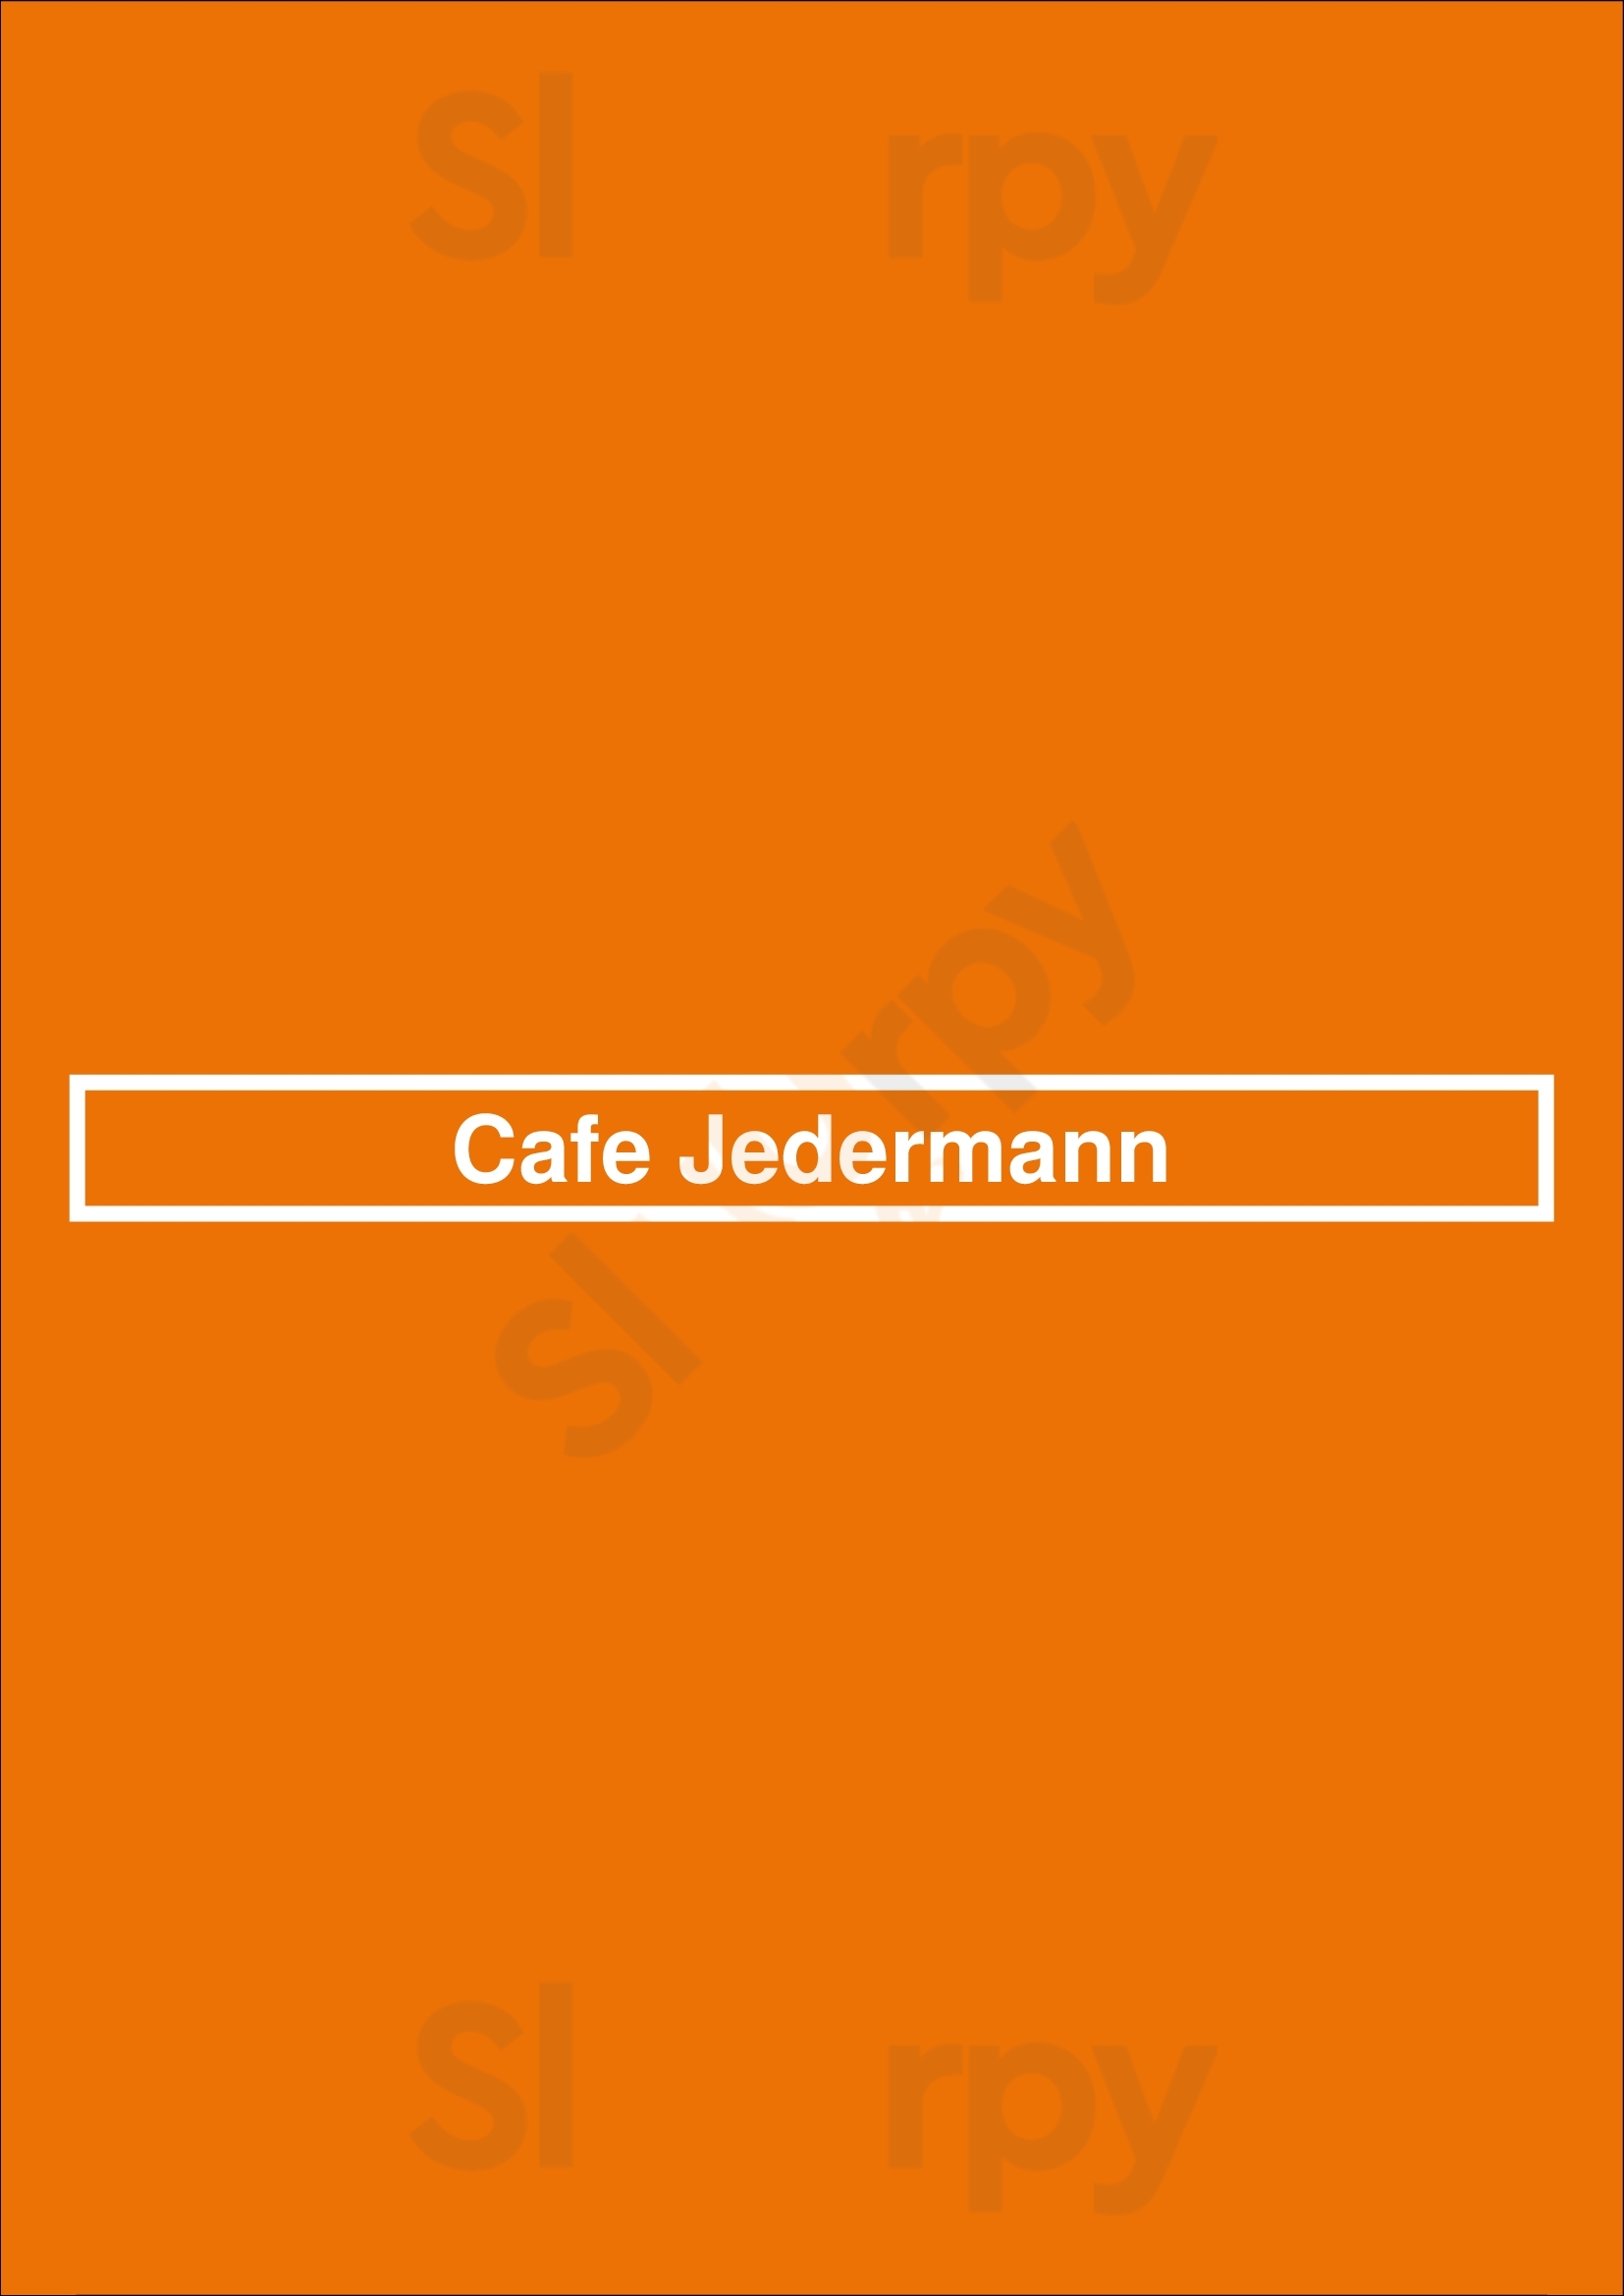 Cafe Jedermann Moers Menu - 1